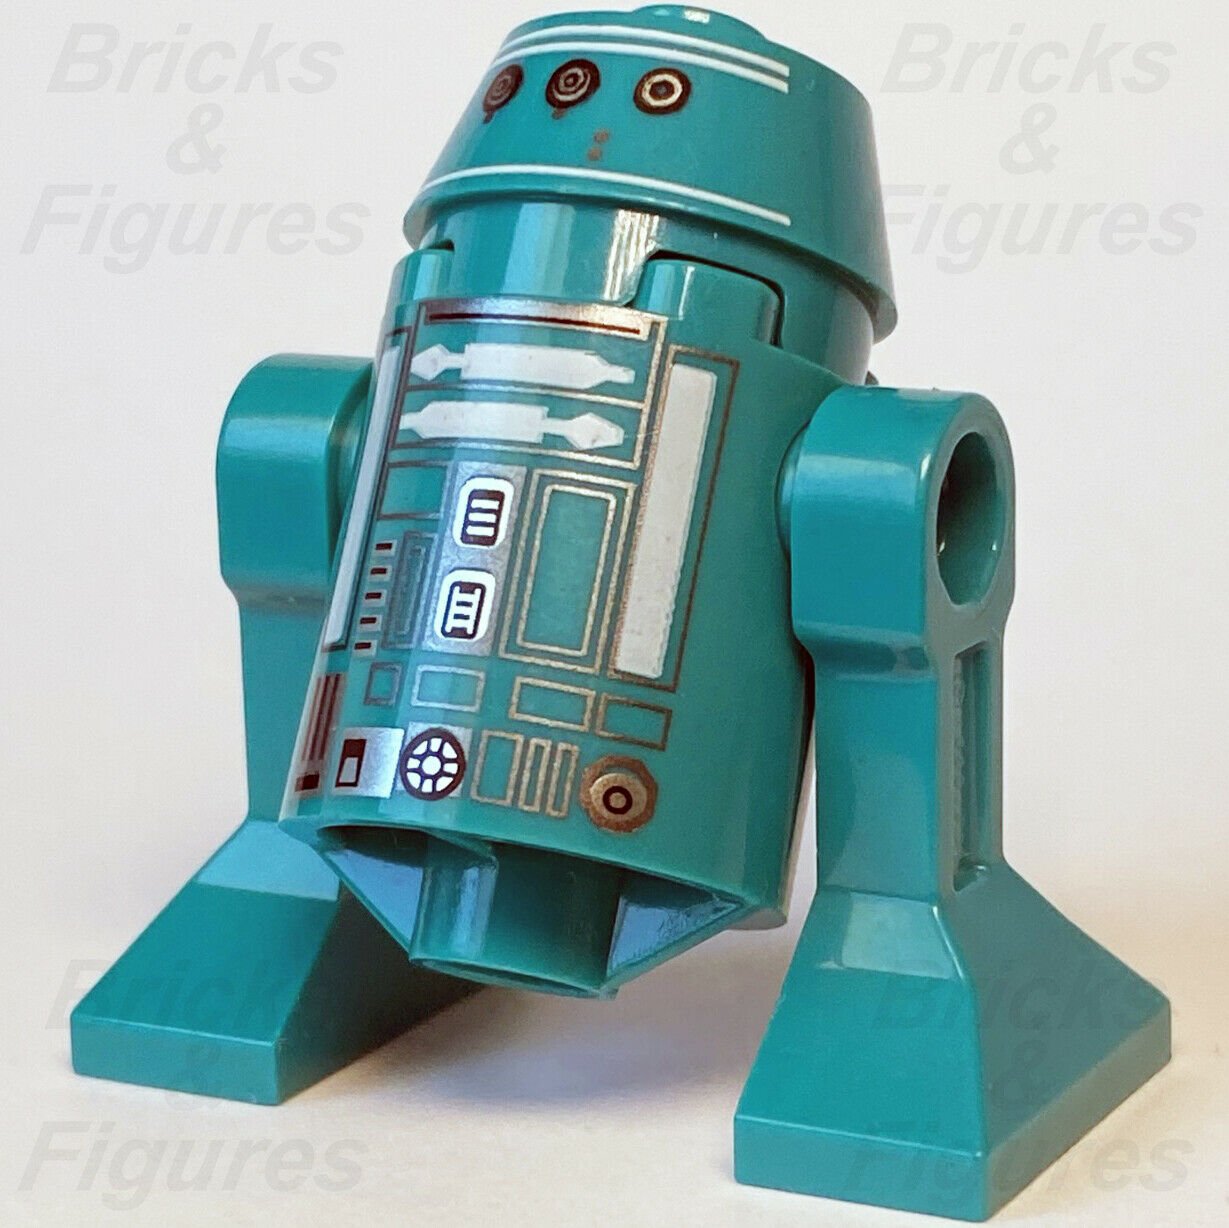 Star Wars LEGO Astromech Droid Dark Turquoise Y-Wing Episode 9 Minifigure 75249 - Bricks & Figures